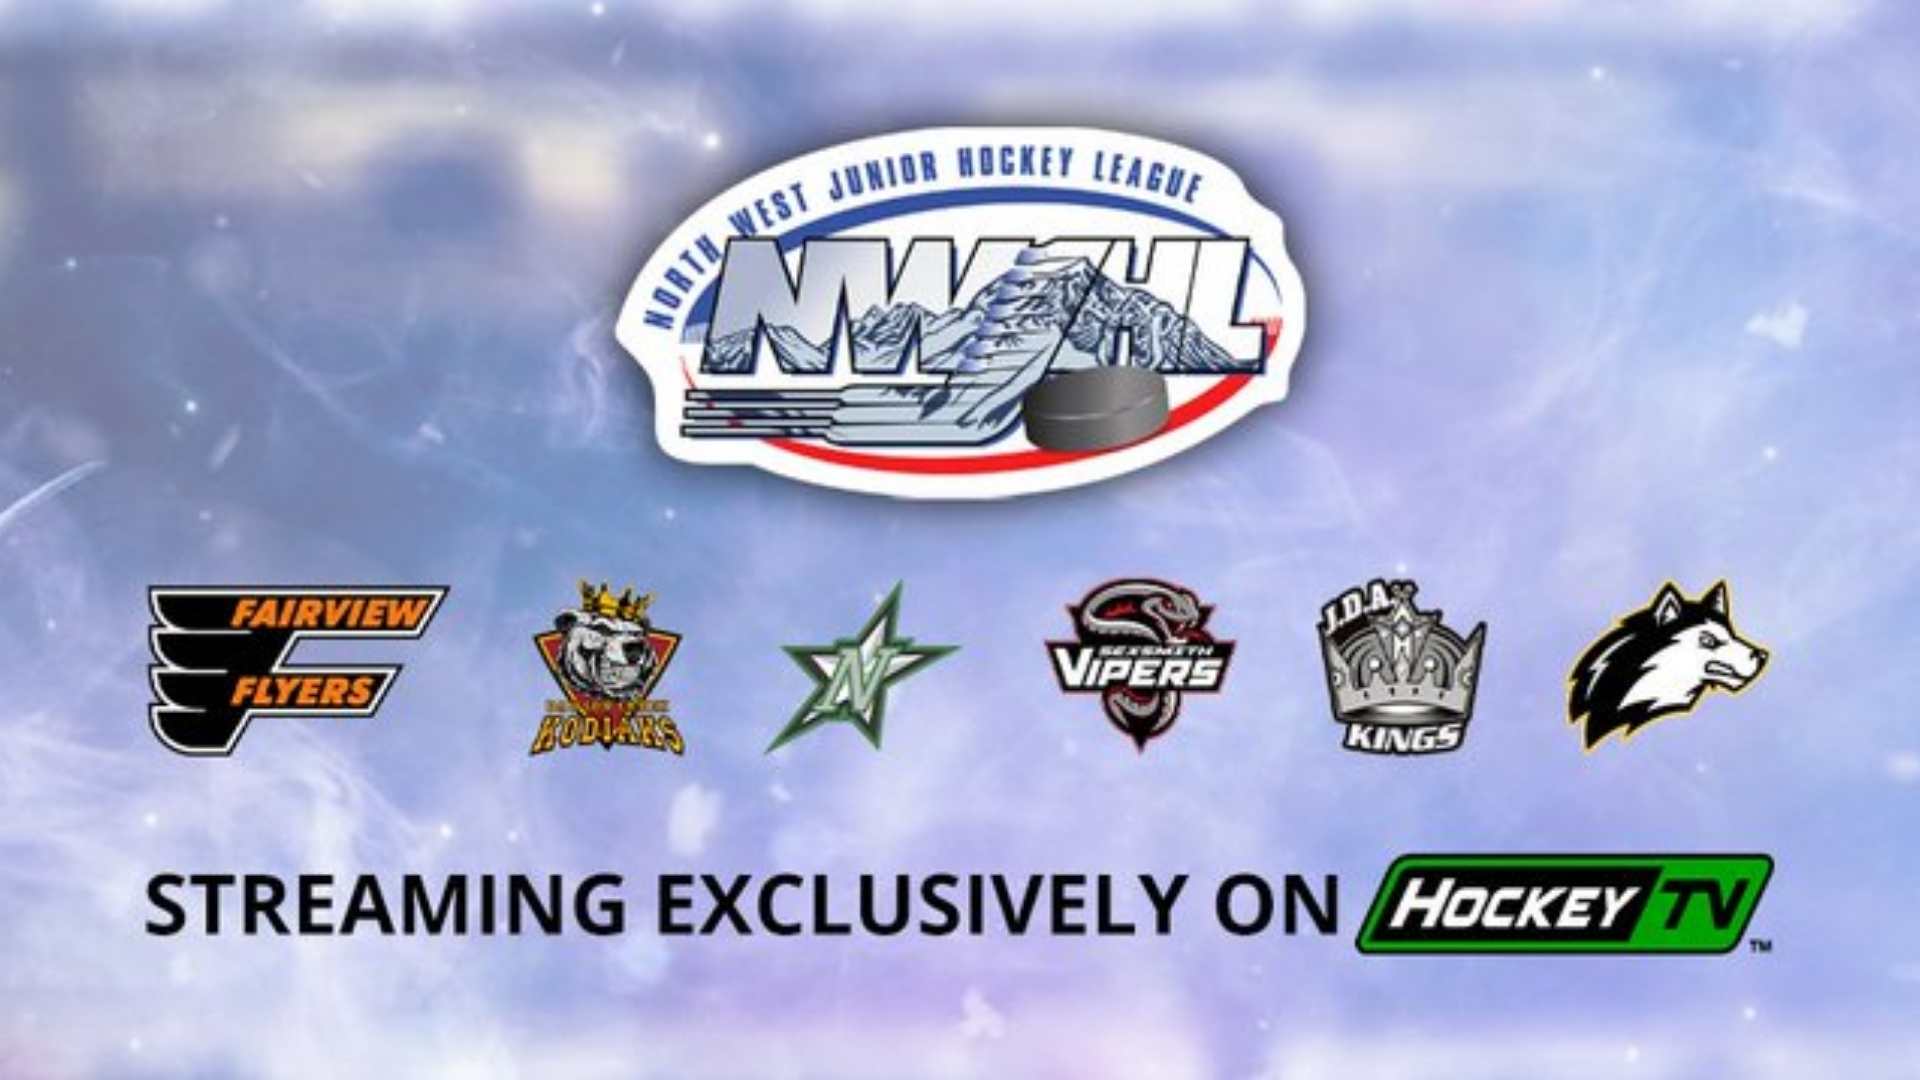 NWJHL to broadcast all games on HockeyTV